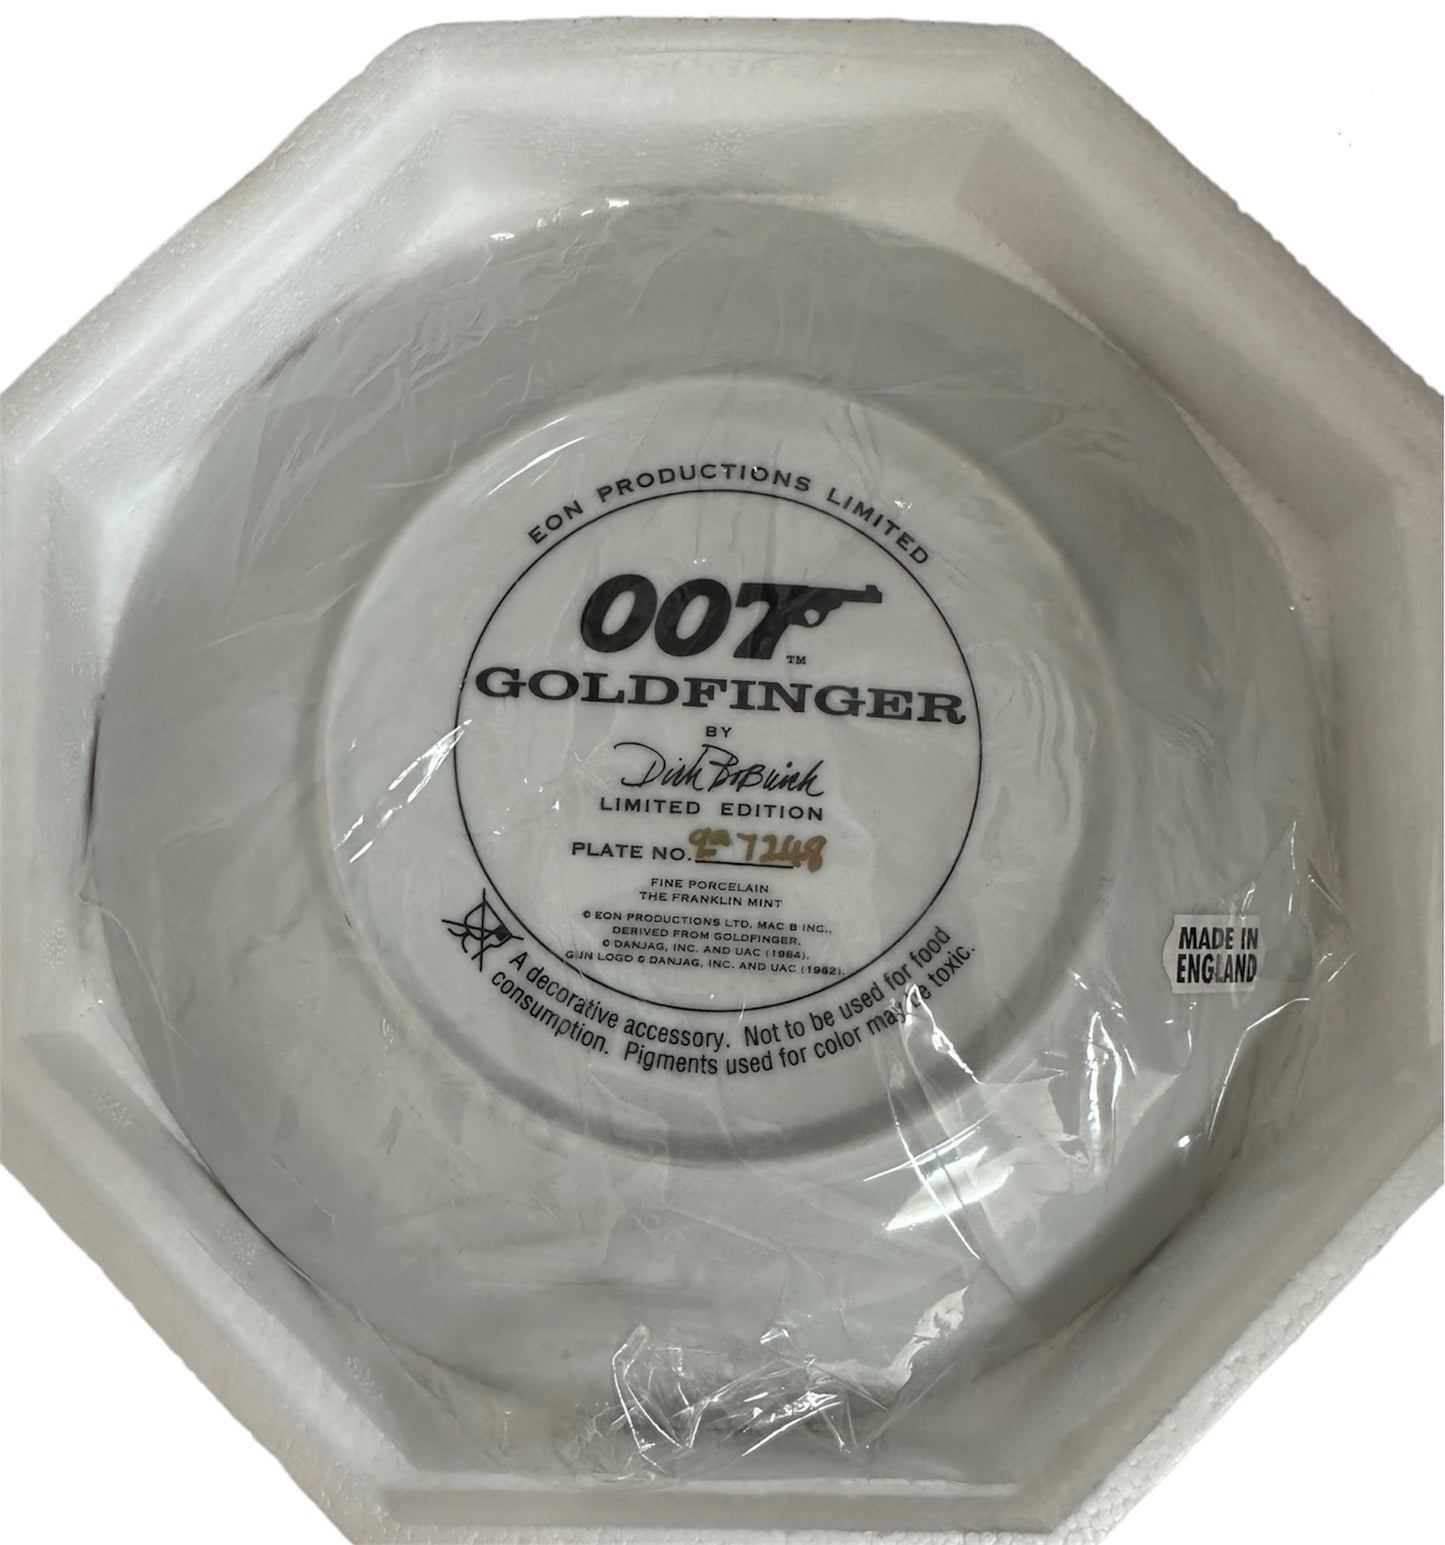 Vintage 1995 James Bond 007 Goldfinger Limited Edition Collectable Plate - Sean Connery, Gert Frobe & Harold Sakata - Shop Stock Room Find